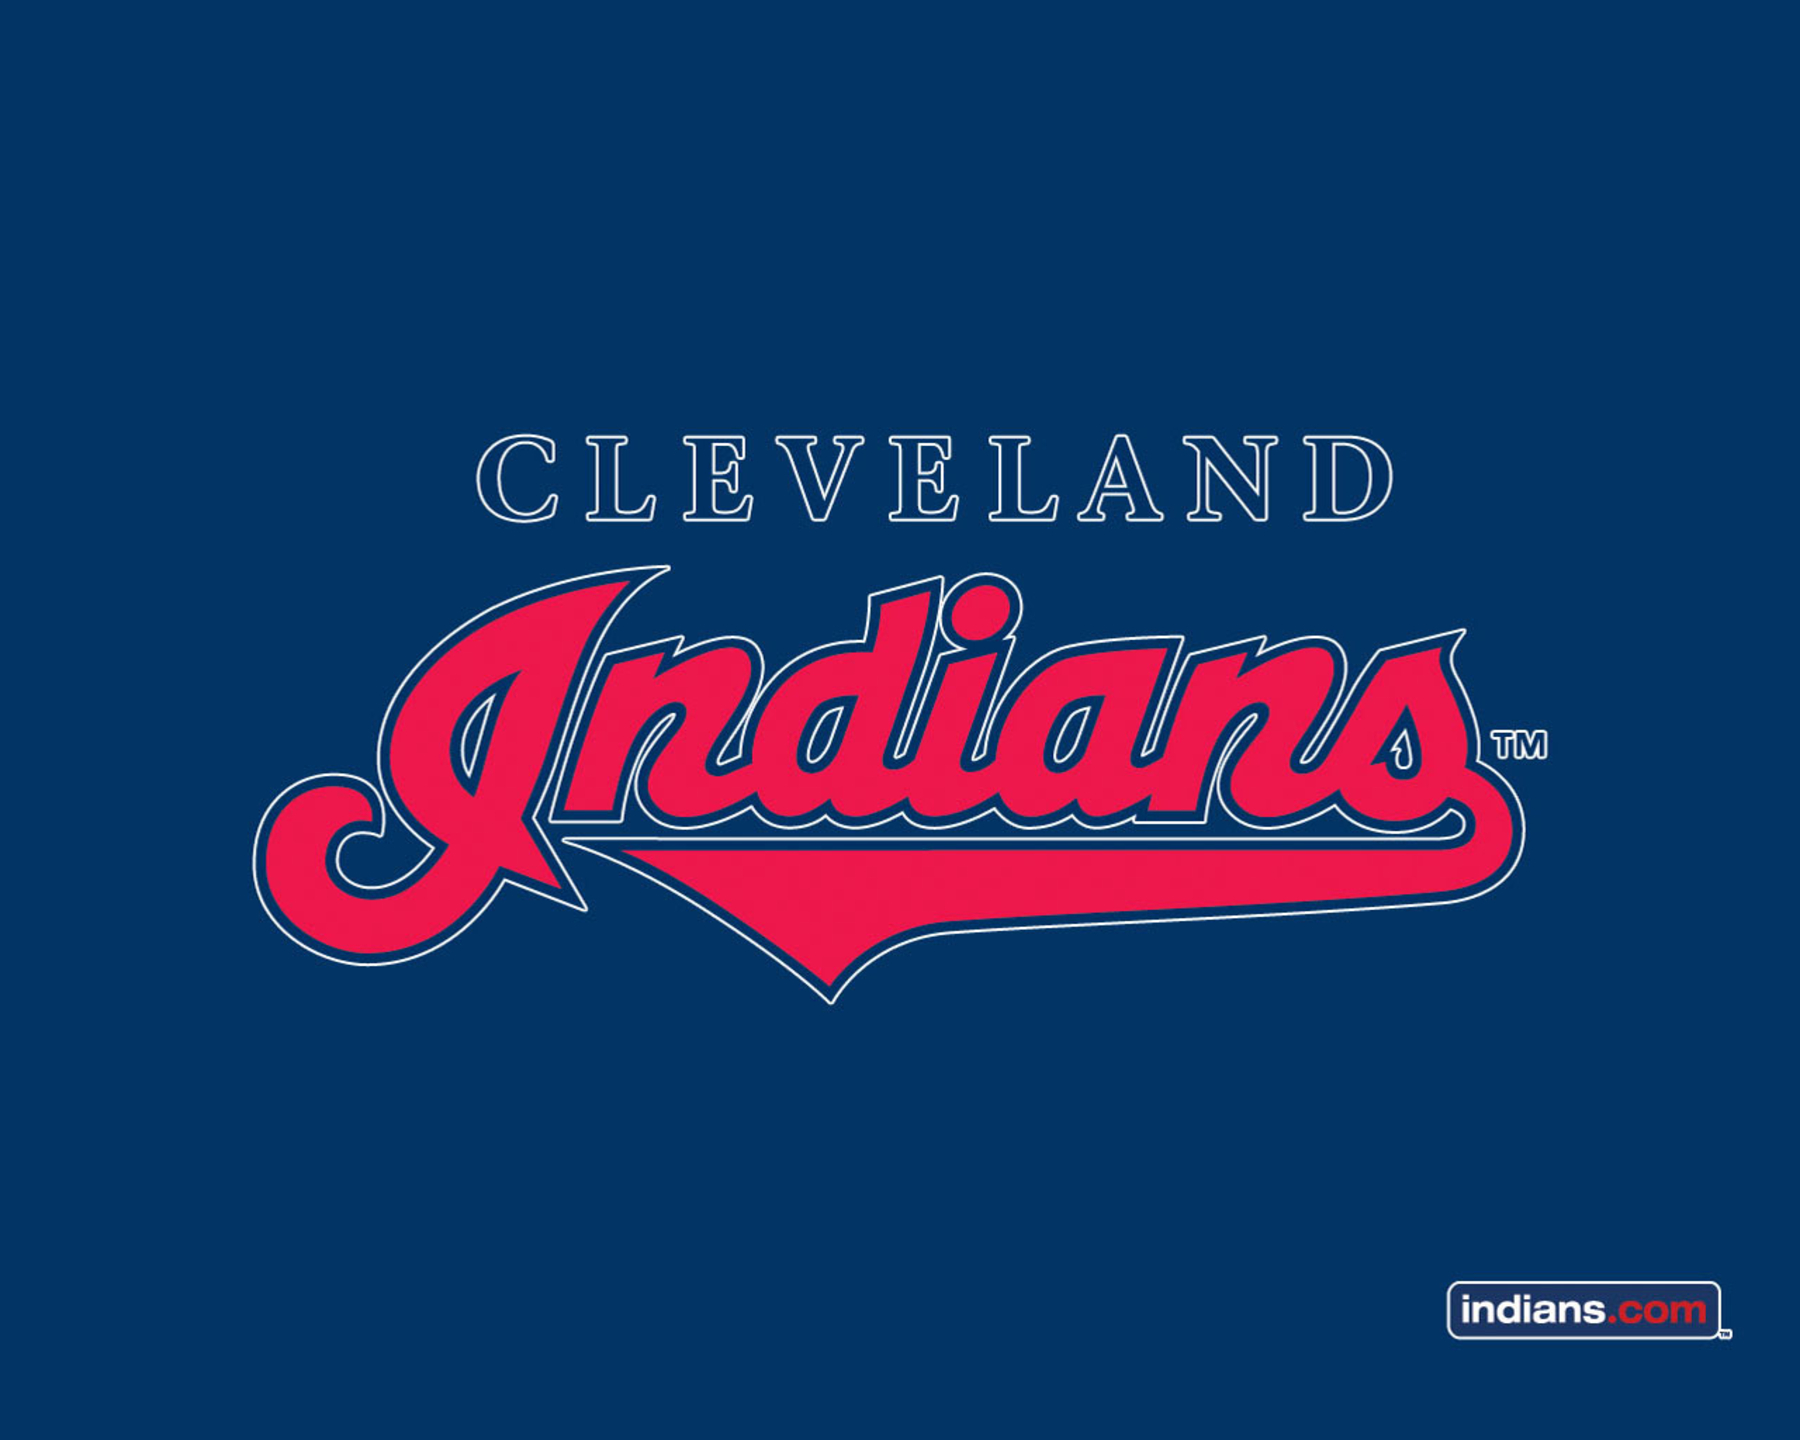 Cleveland Indians Mlb Baseball 45 Wallpapers Hd Desktop And Mobile Backgrounds